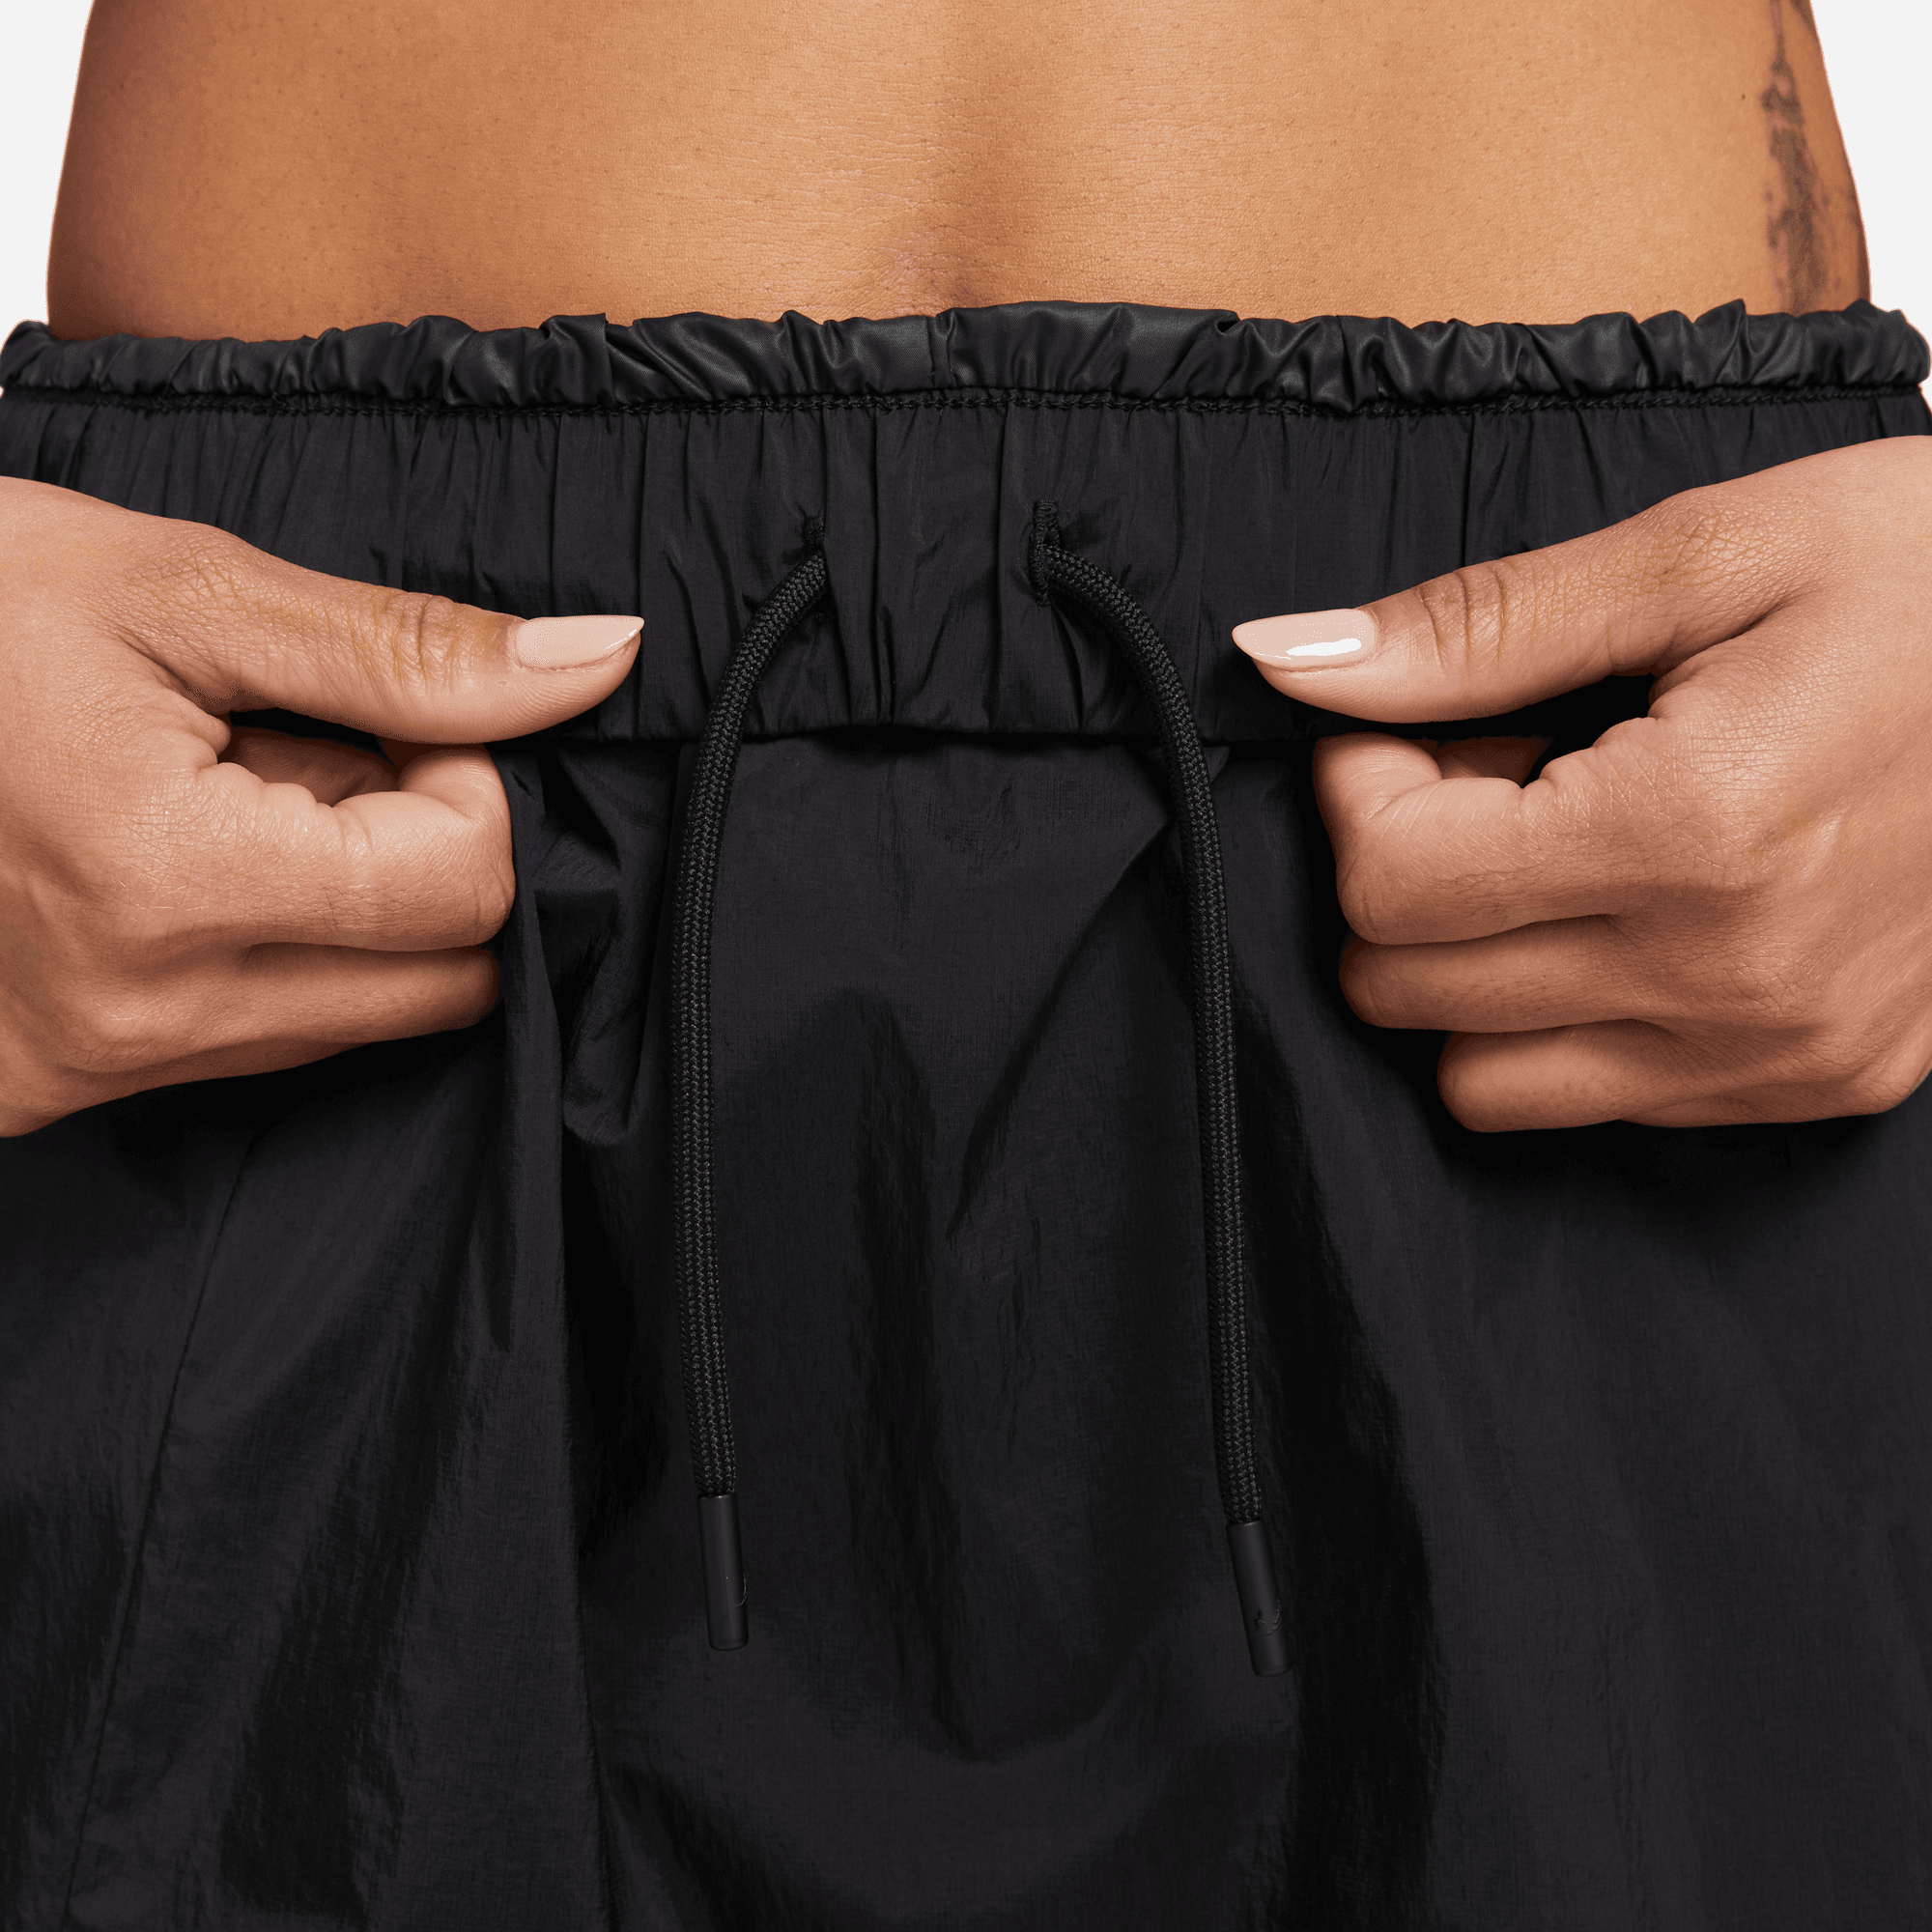 Jordan x Nina Chanel Abney Pants - Black/Black